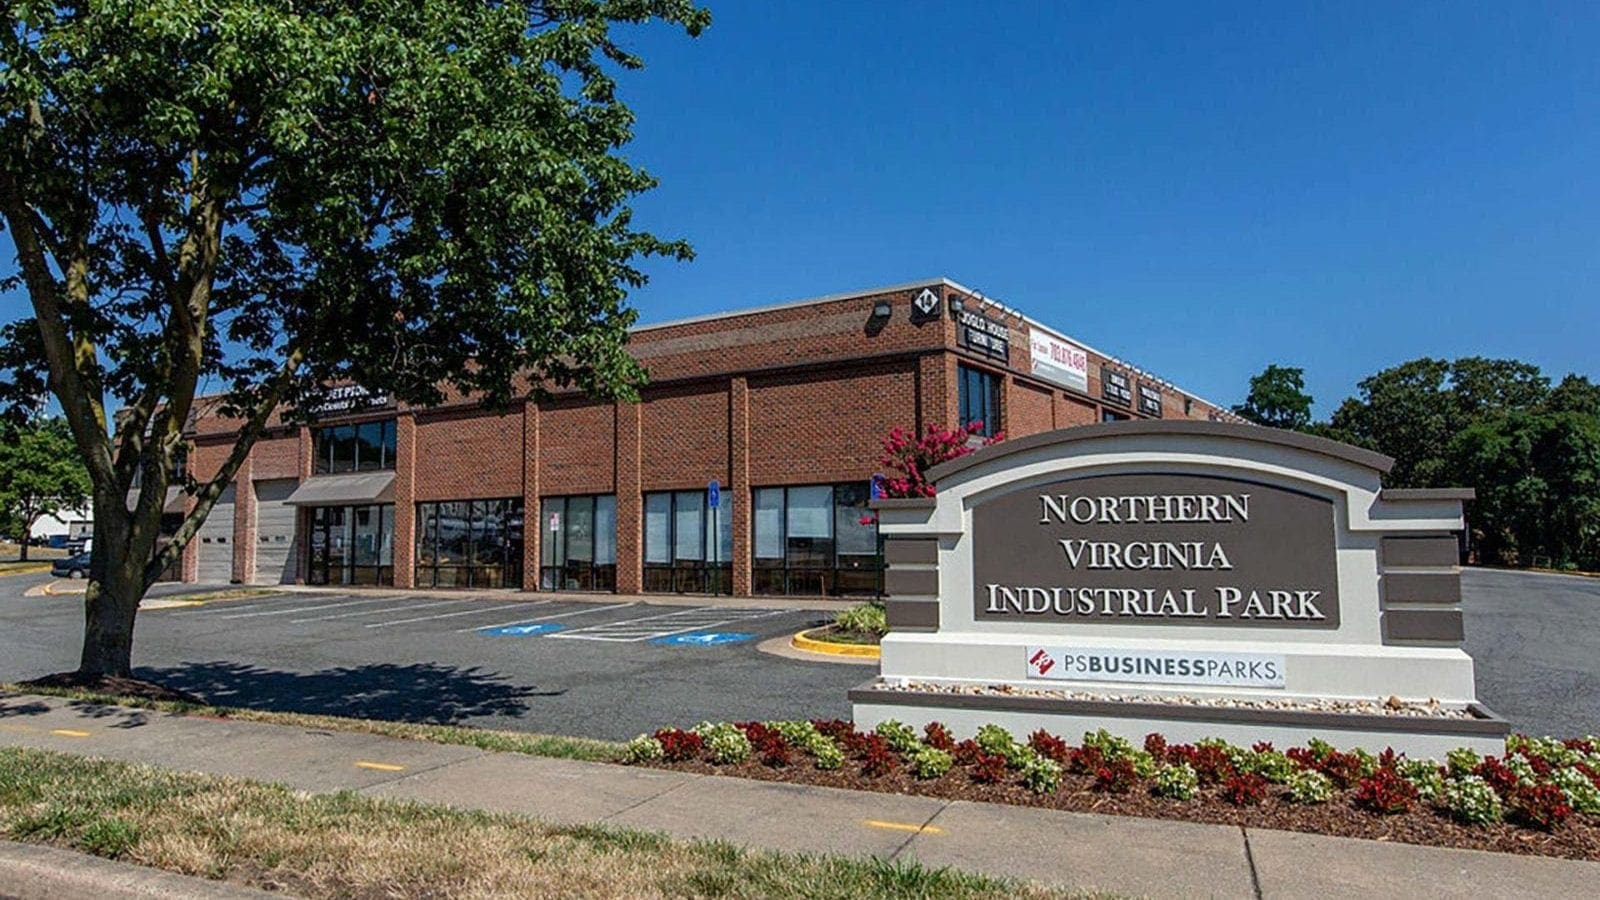 Northern Virginia Industrial Park exterior entrance sign photo